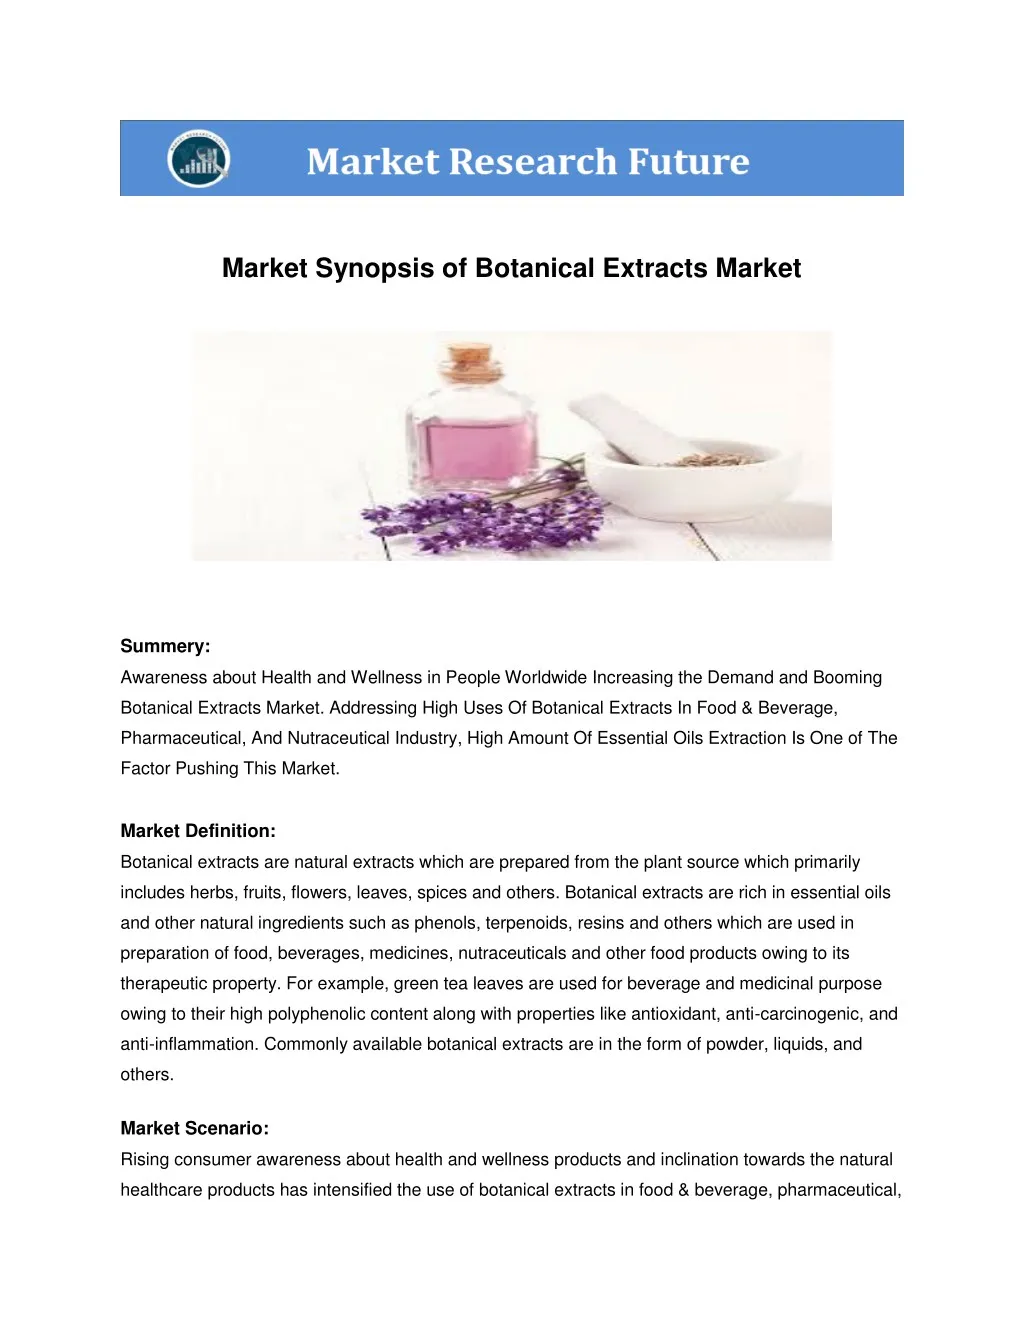 market synopsis of botanical extracts market